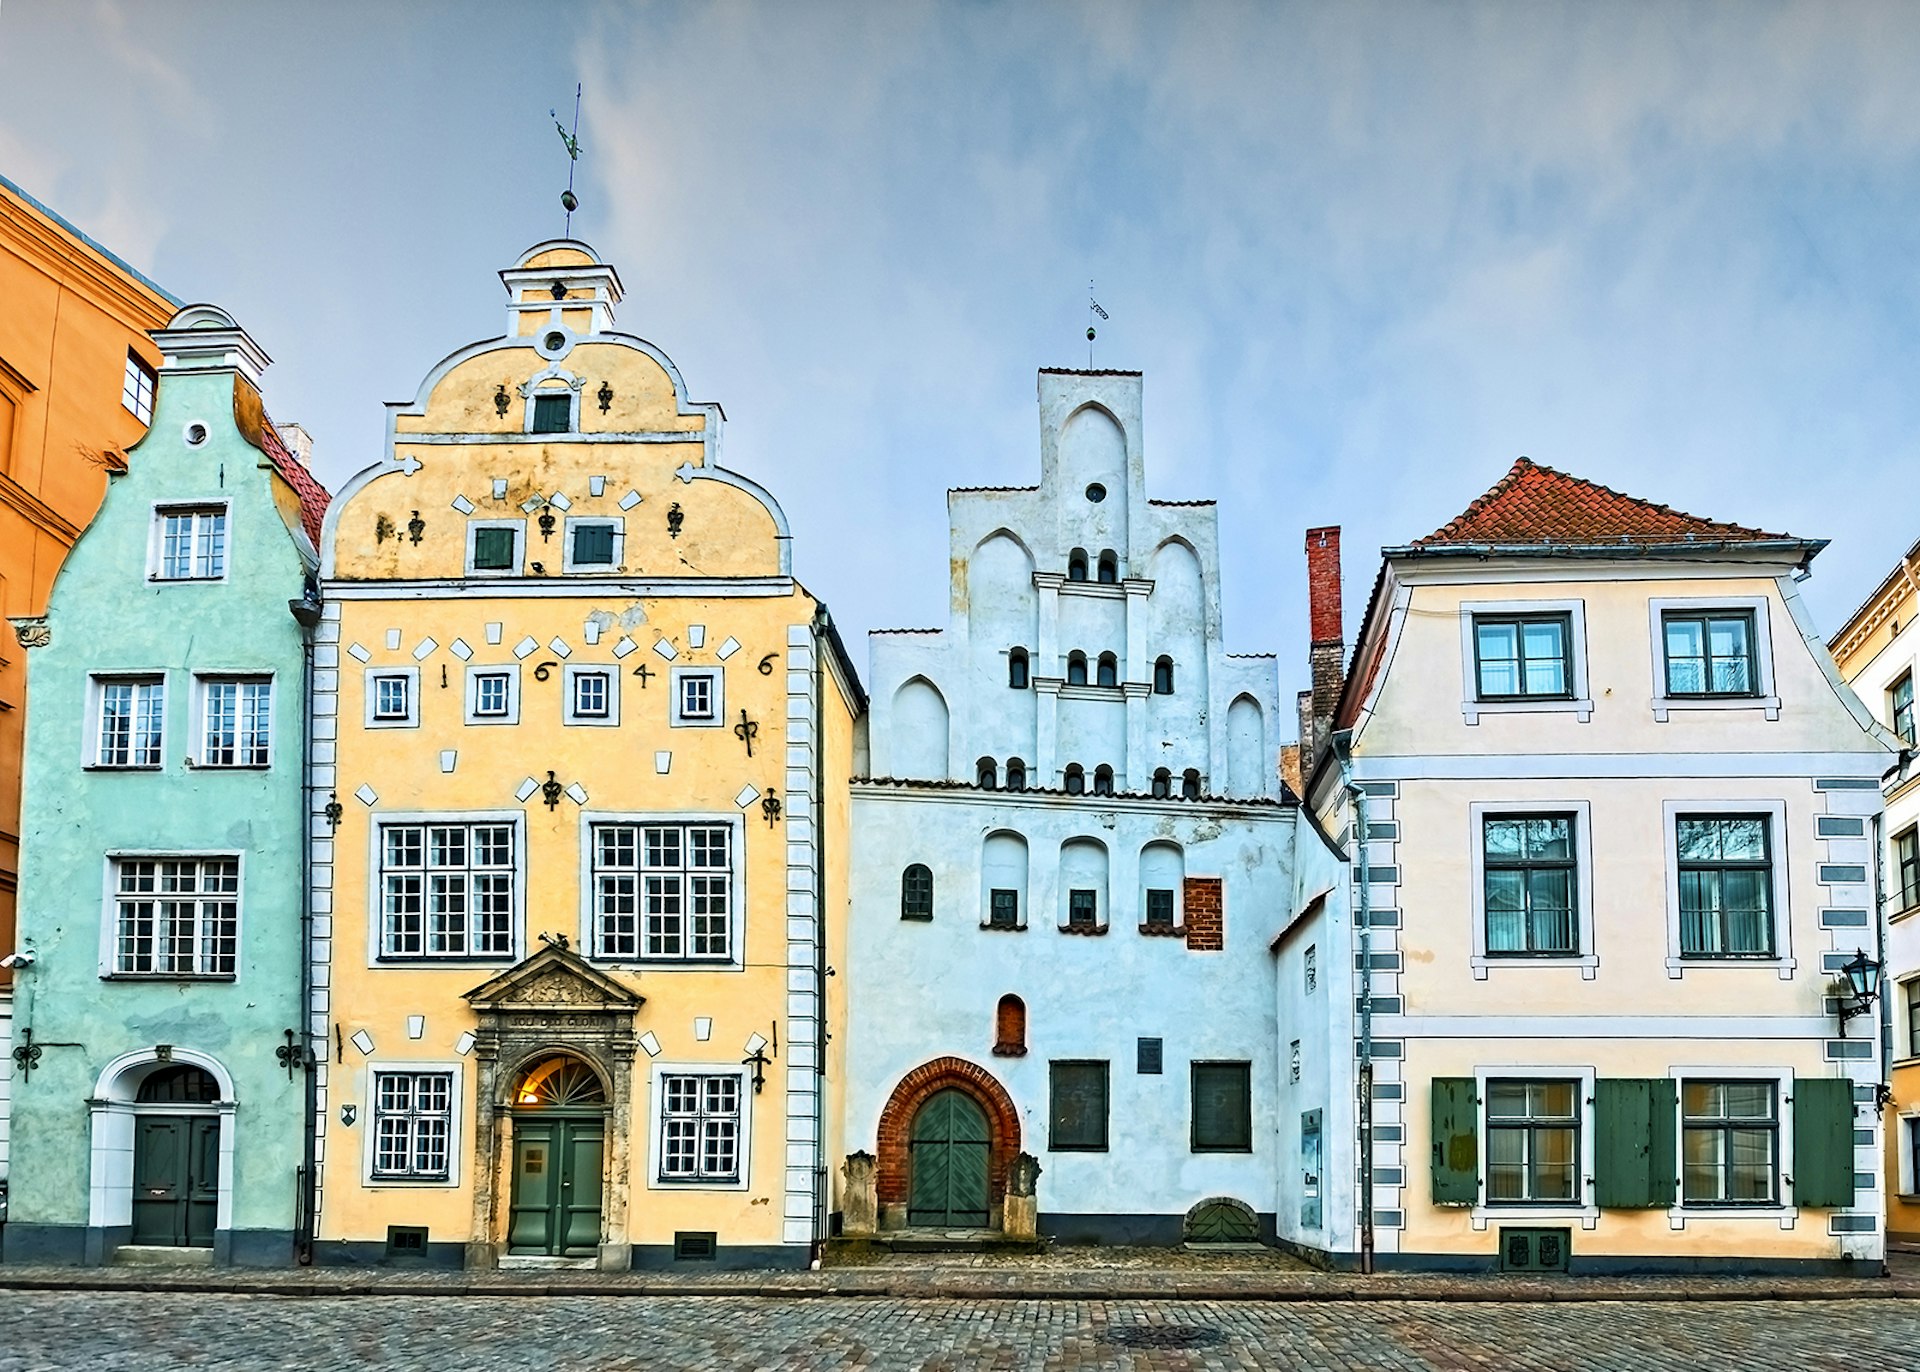 Medieval buildings in old Riga city, Latvia © Sergel / Shutterstock